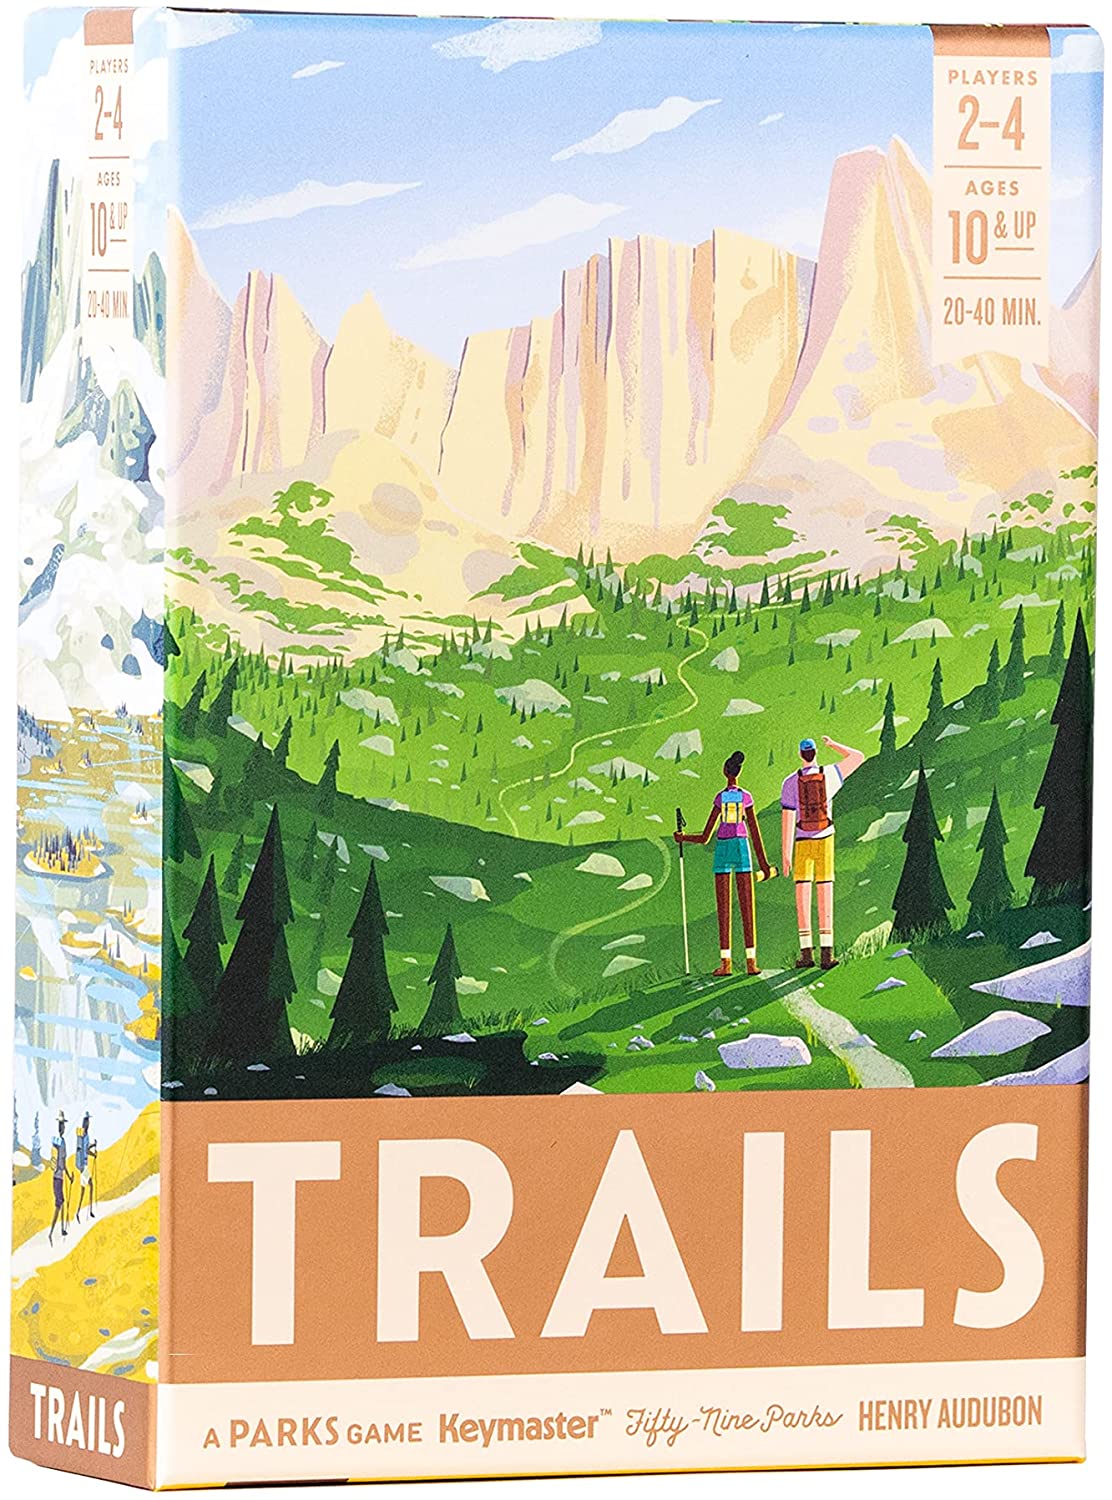 Trails: A Park Game